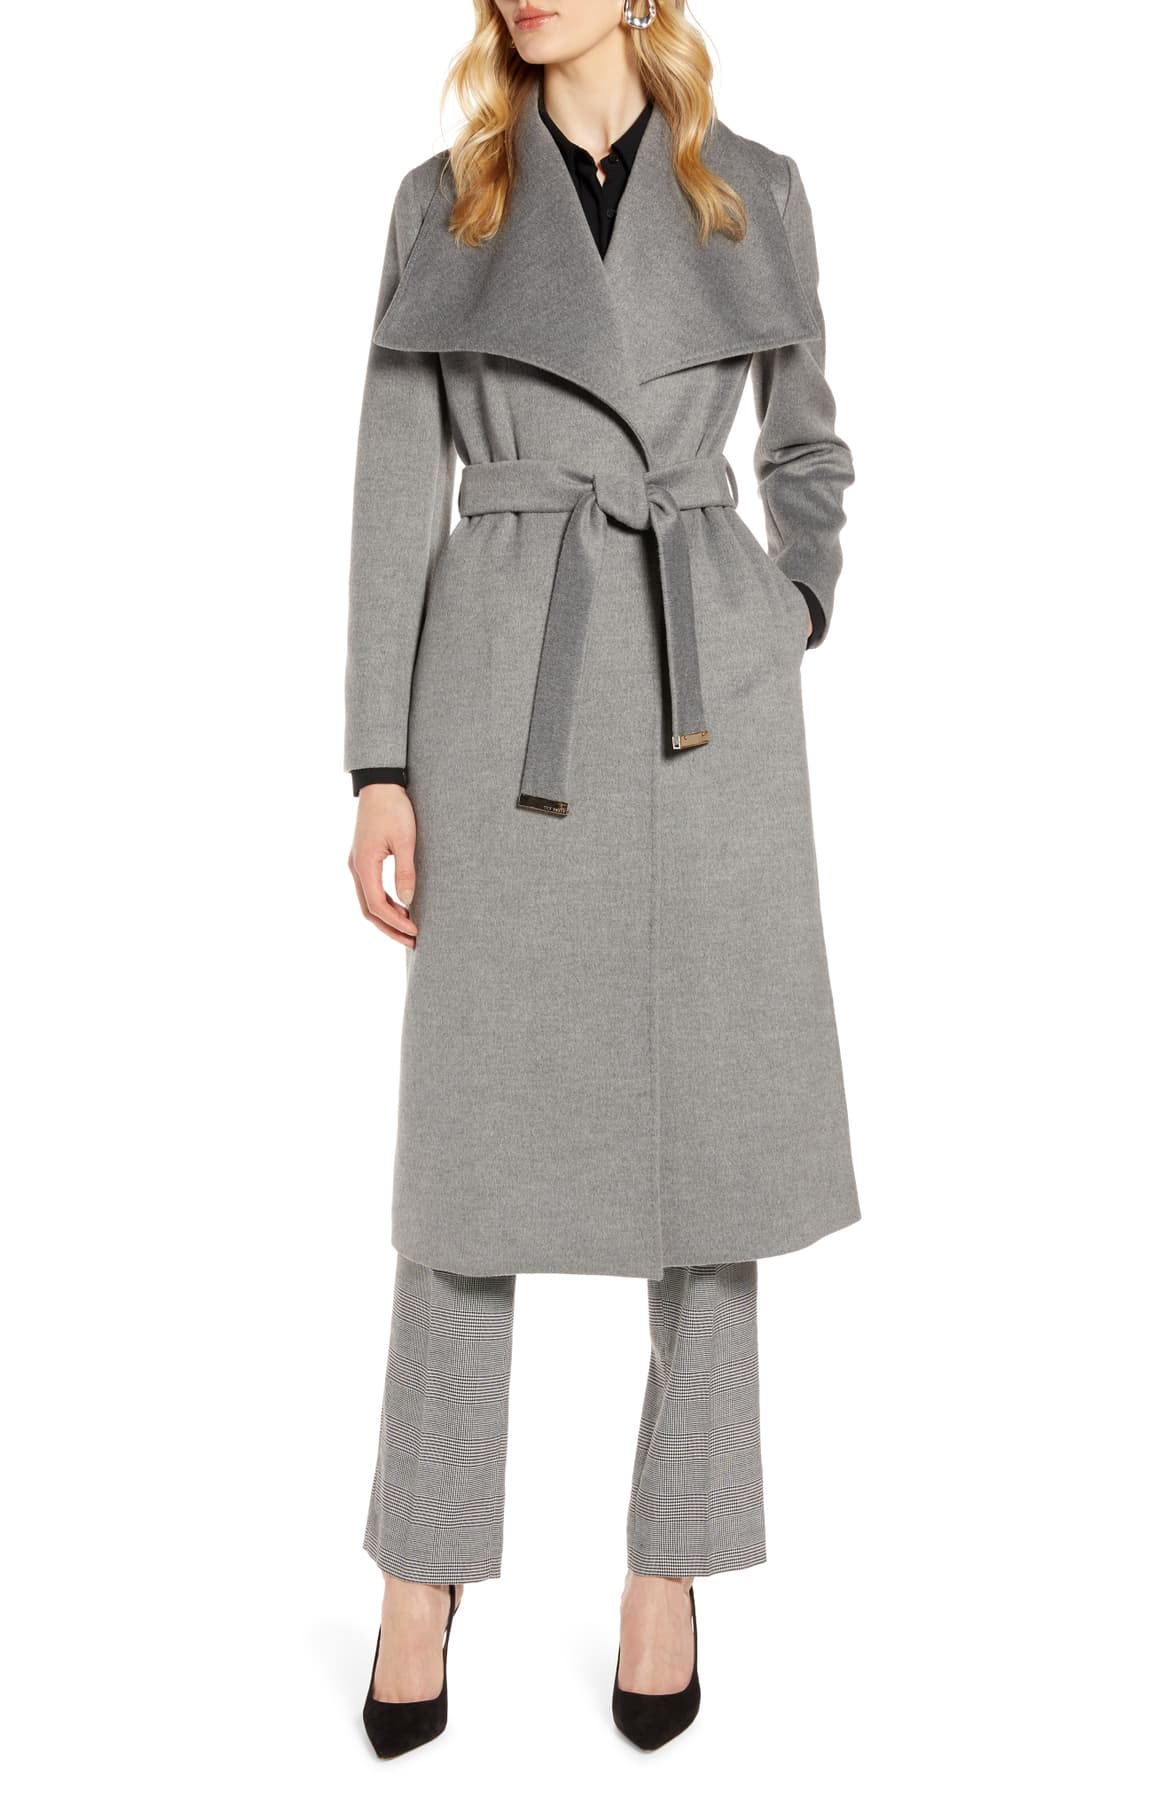 grey wool coat